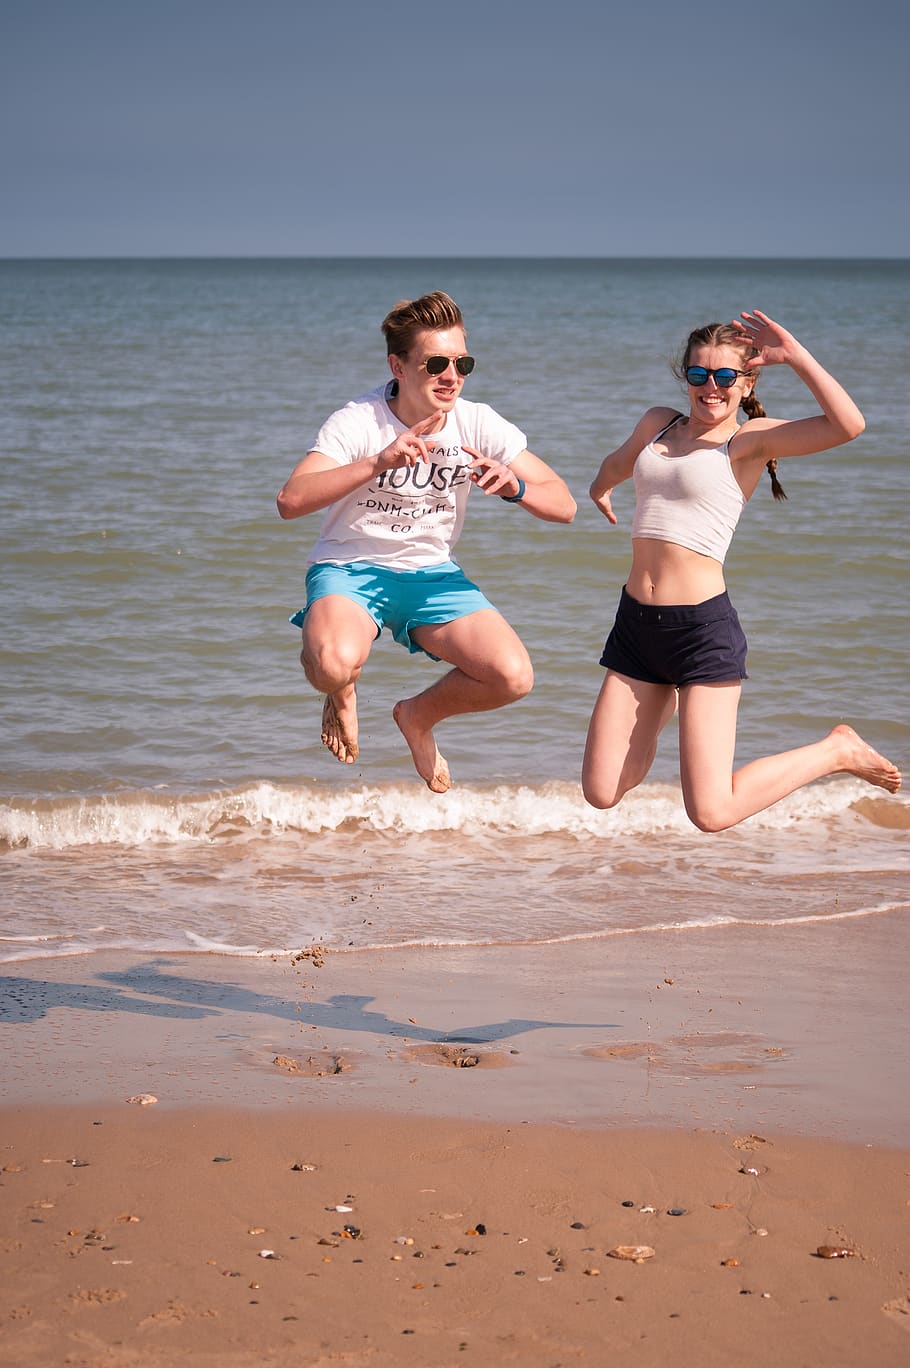 people, jumping, beach, boy, girl, fun, play, ocean, water, sea